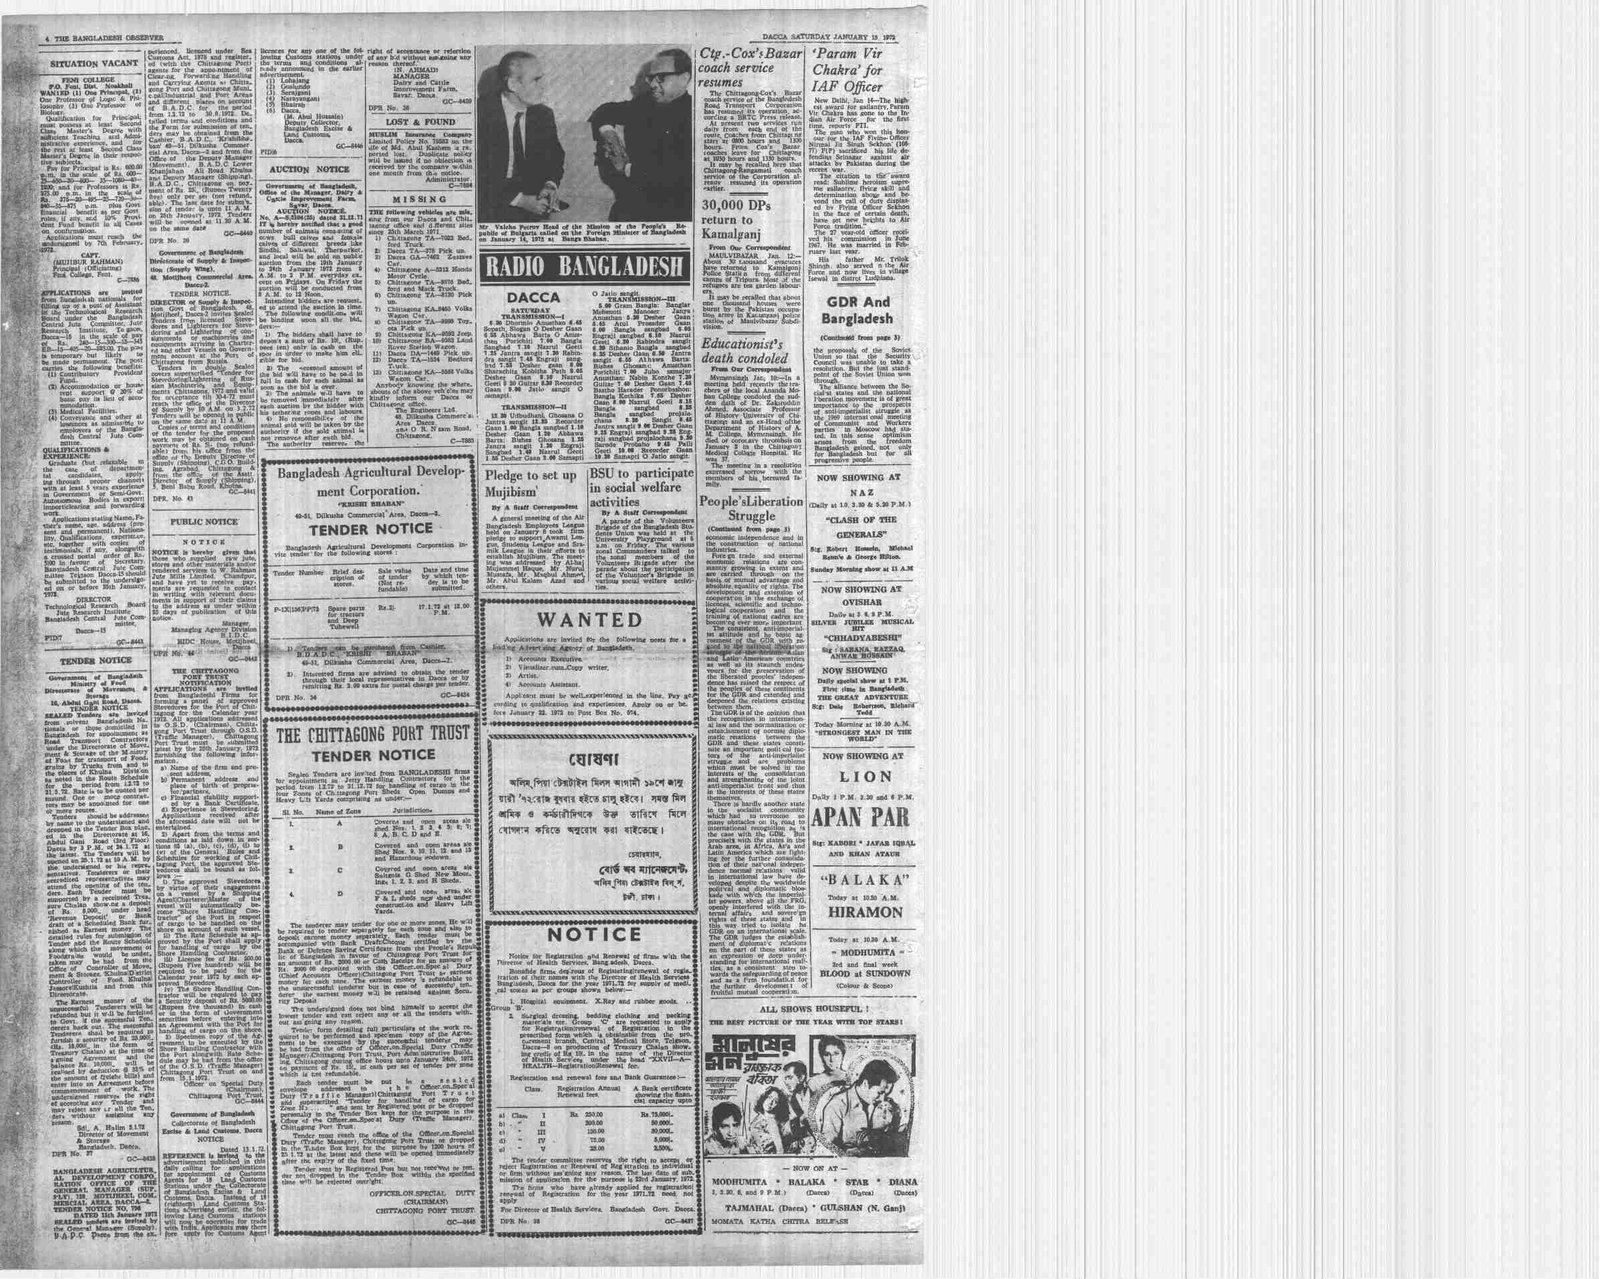 15JAN1972-Bangladesh Observer-Regular-Page 4